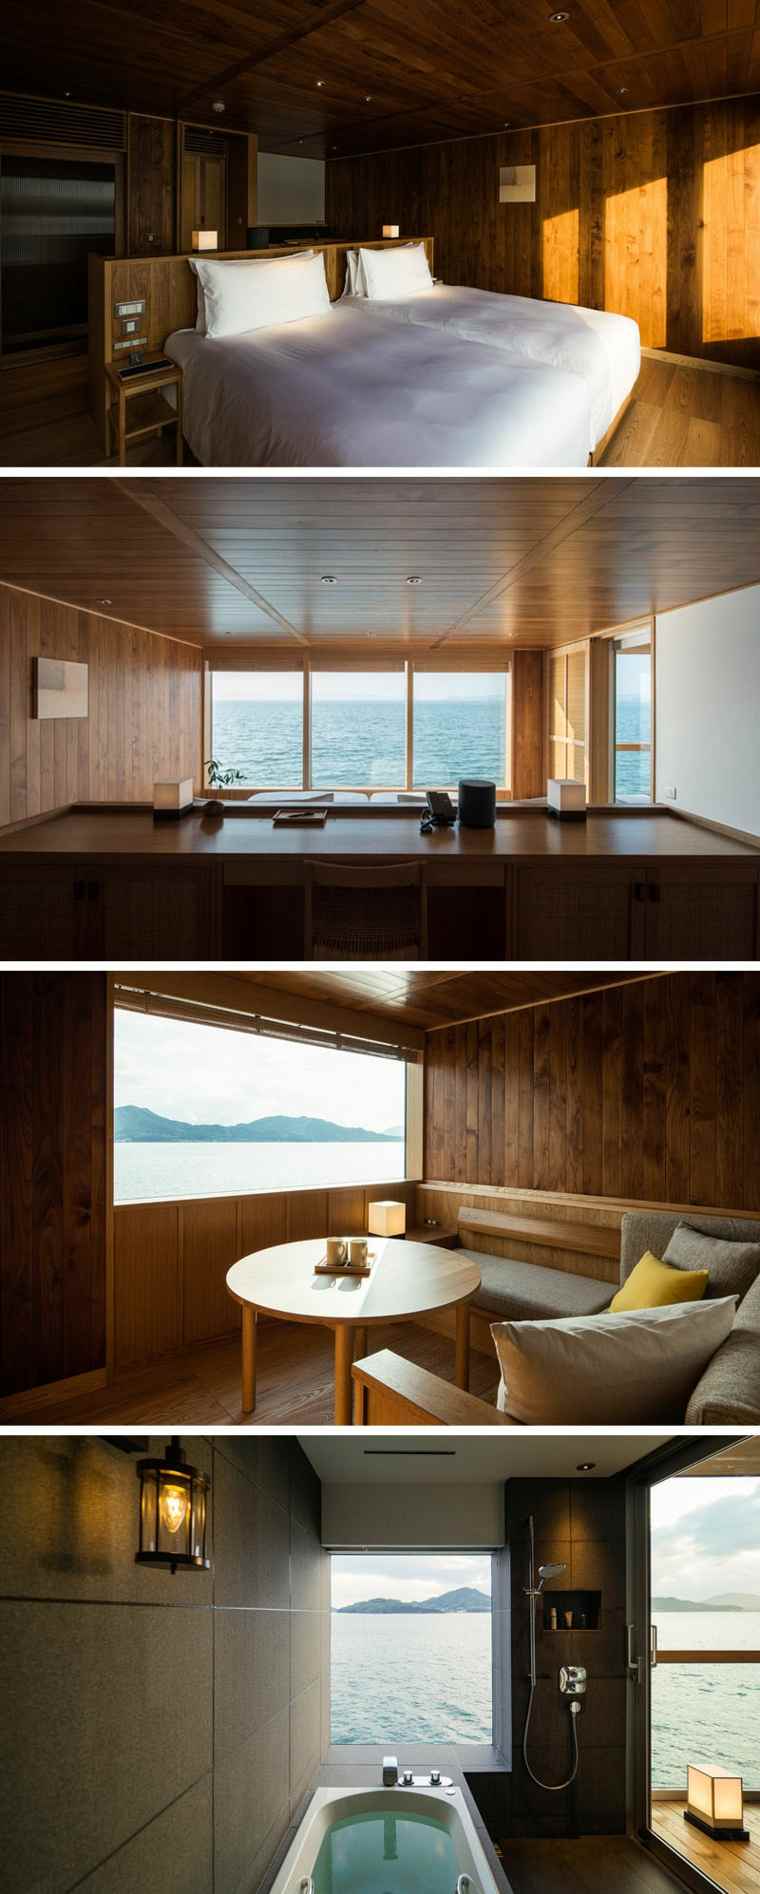 bateau hotel-flottant-guntu-suite-tout-confort